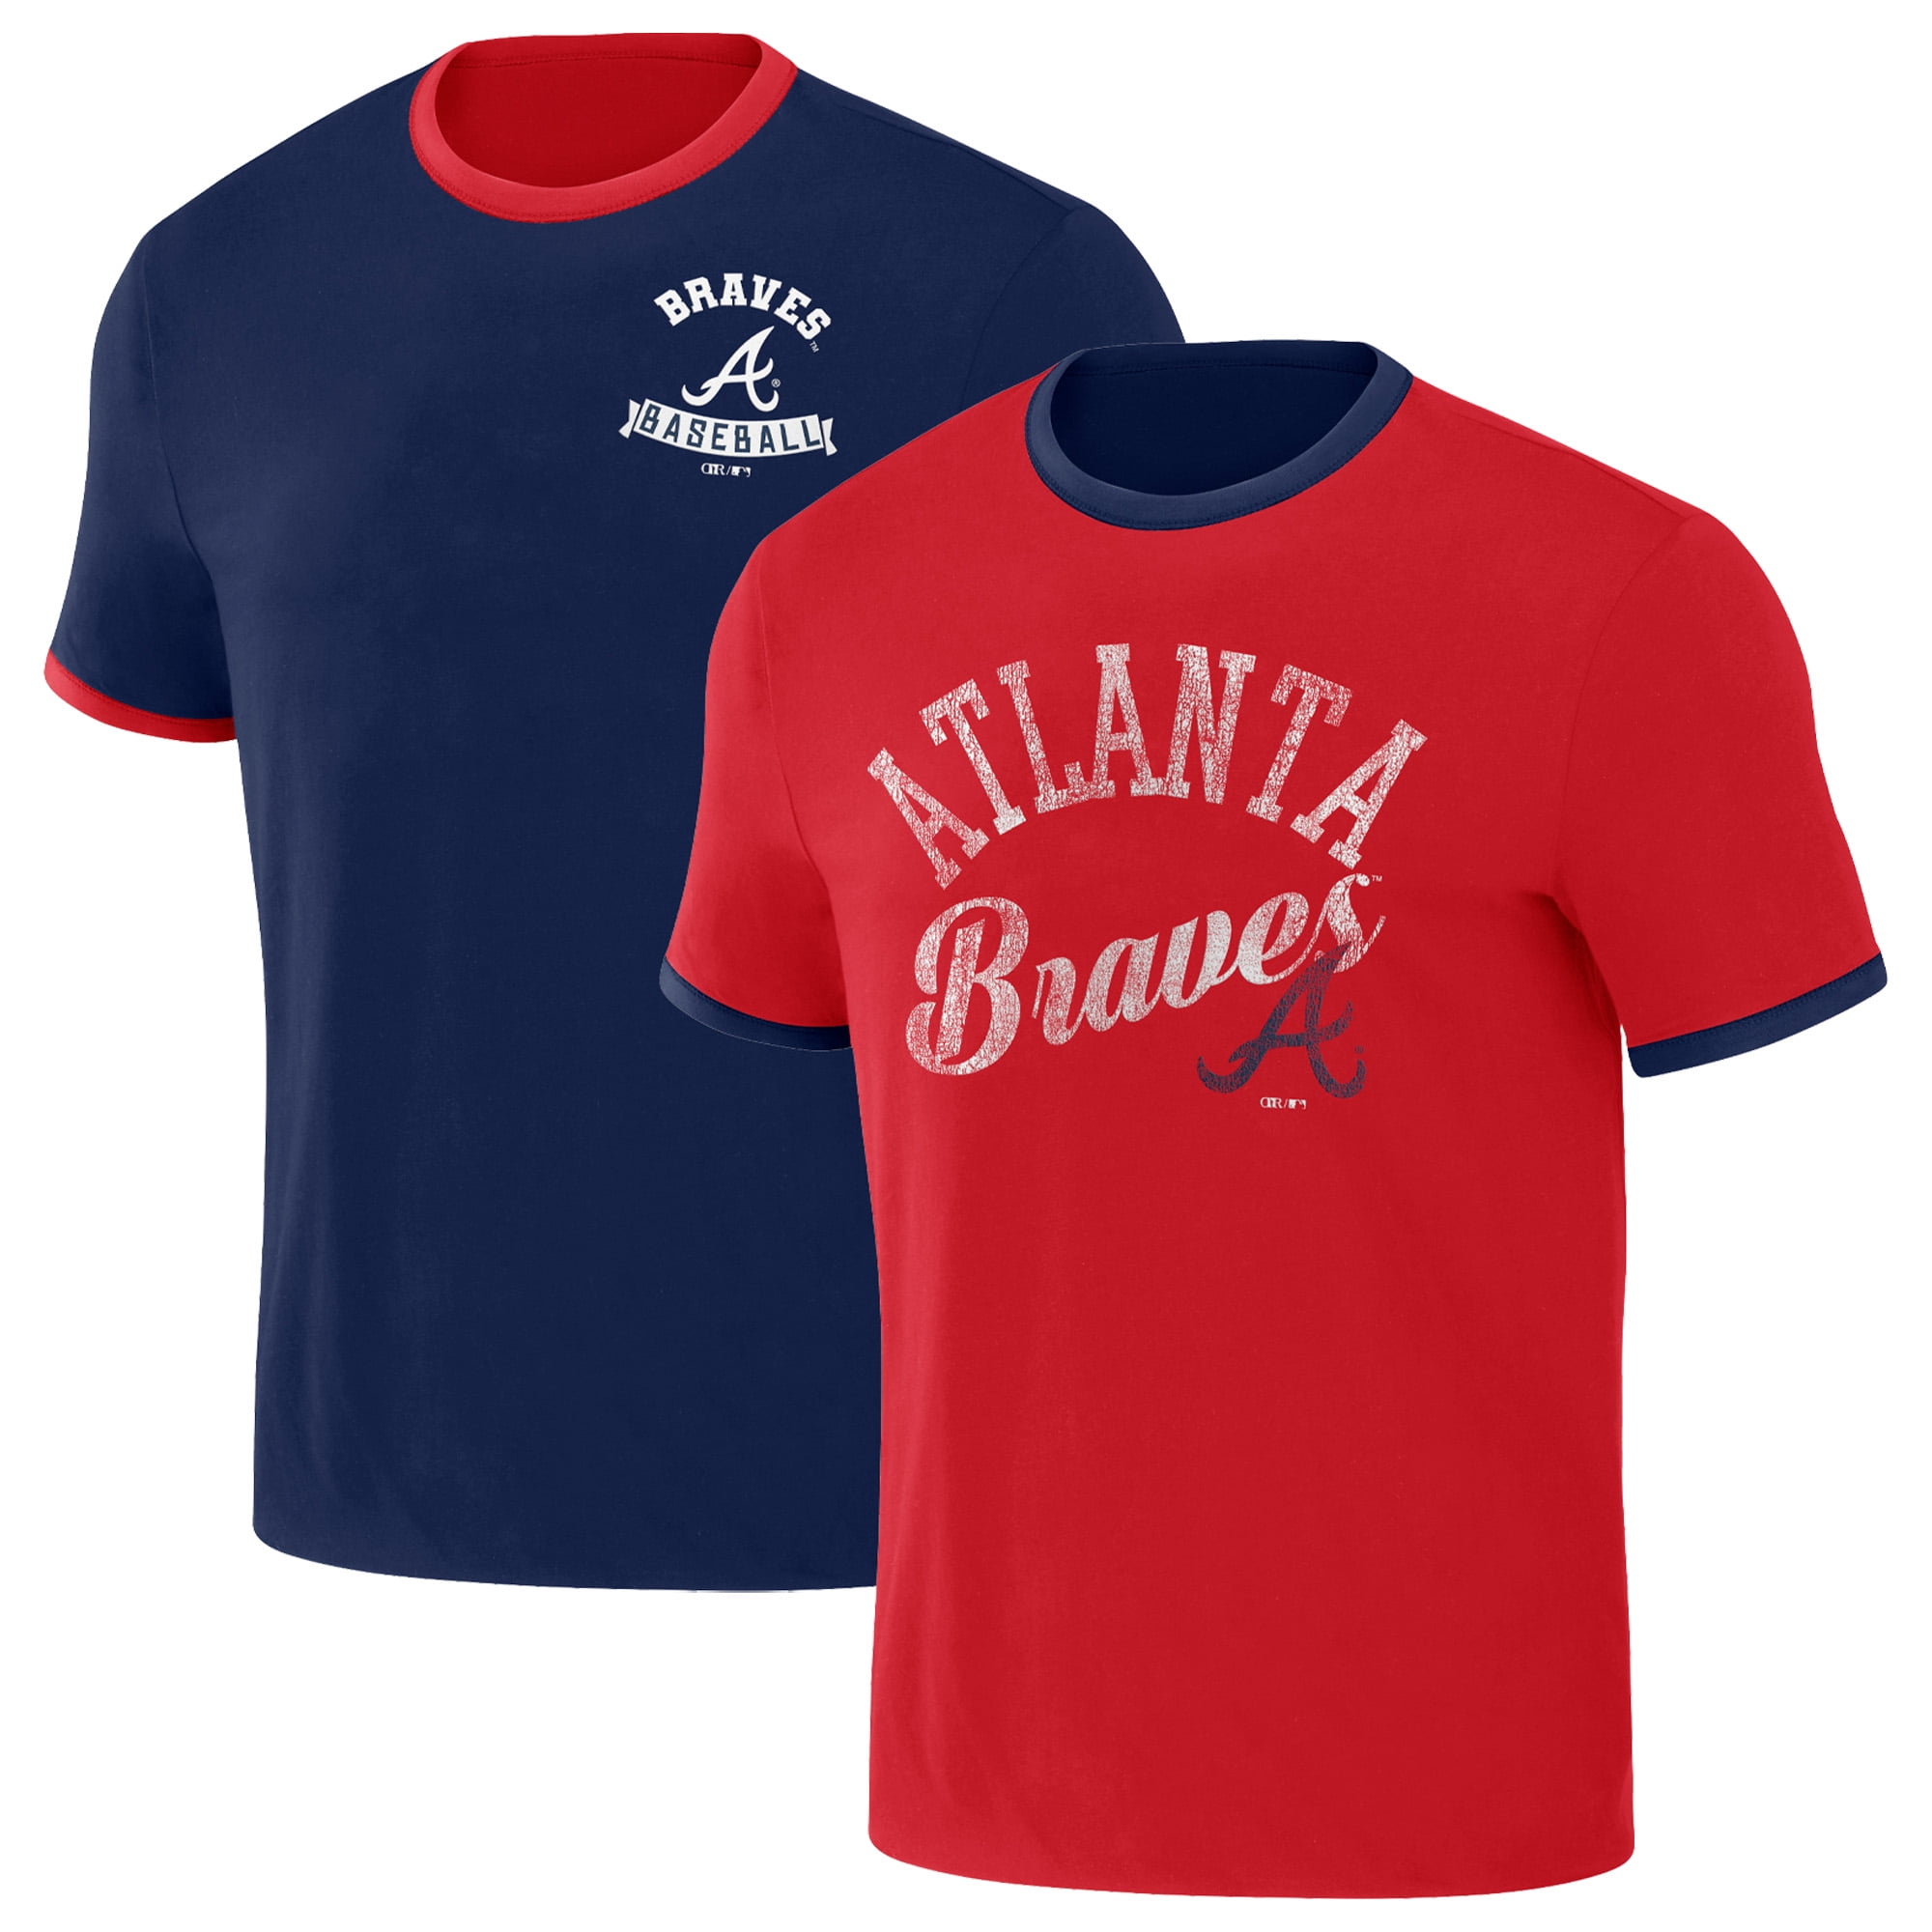 Men's Fanatics Branded Navy/Red Atlanta Braves Polo Combo Set